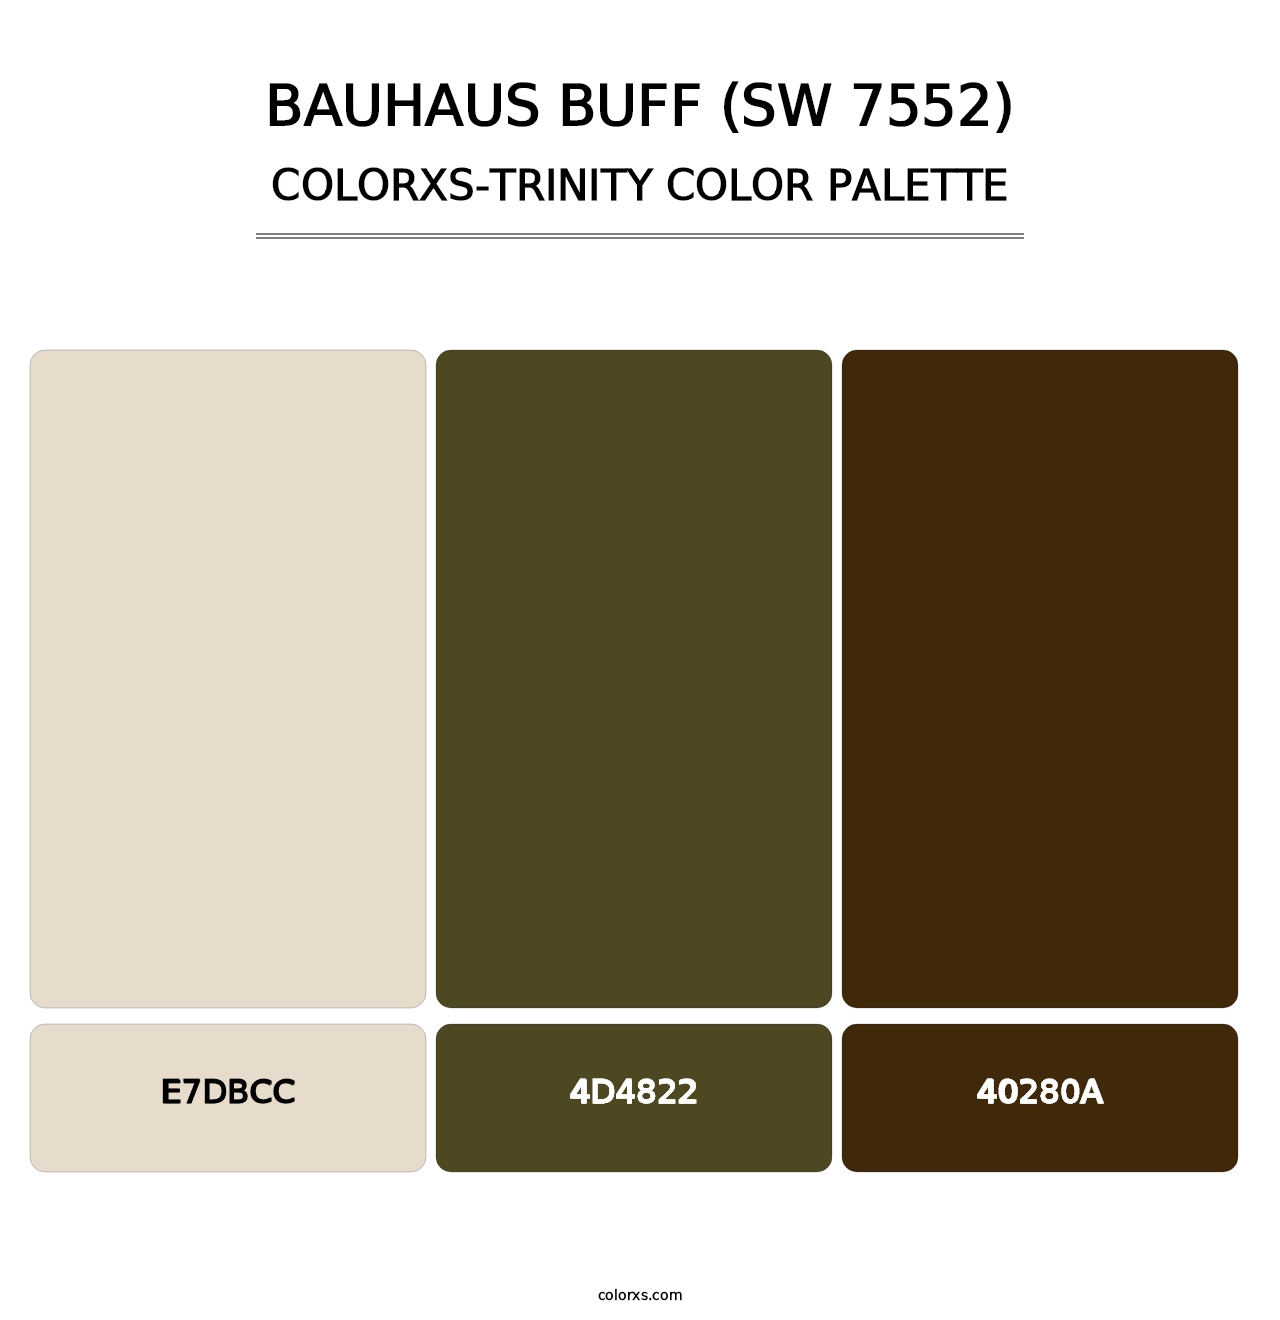 Bauhaus Buff (SW 7552) - Colorxs Trinity Palette